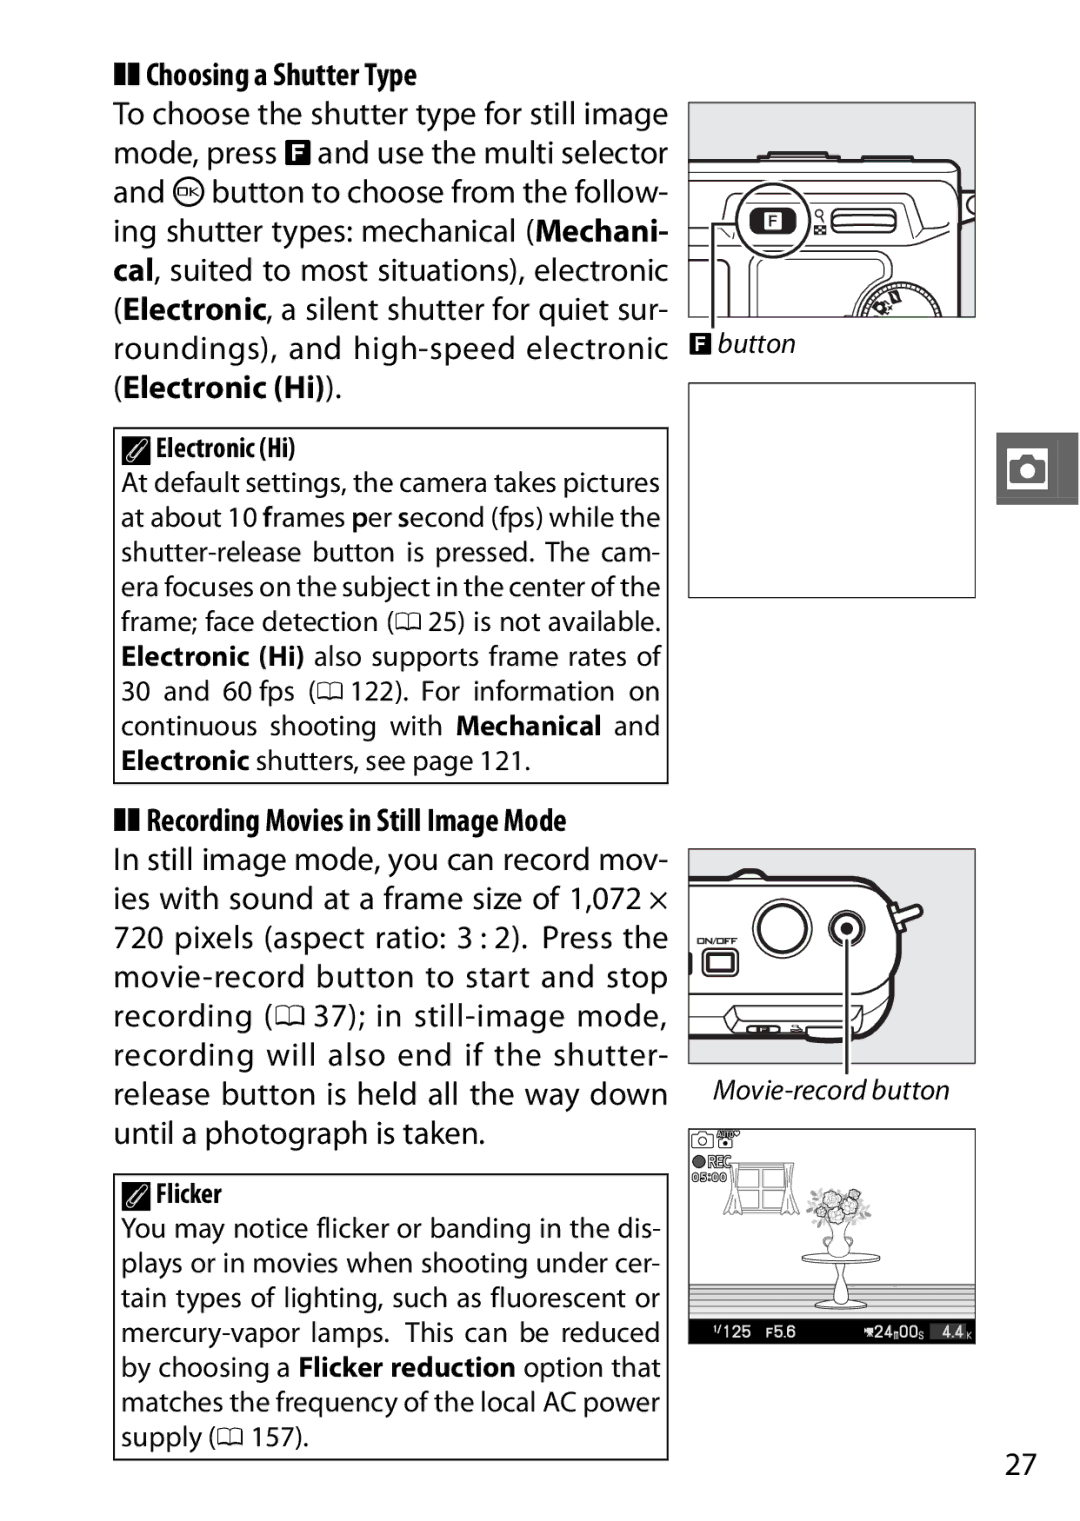 Nikon V1 manual Choosing a Shutter Type, AElectronic Hi, Recording Movies in Still Image Mode, Flicker 